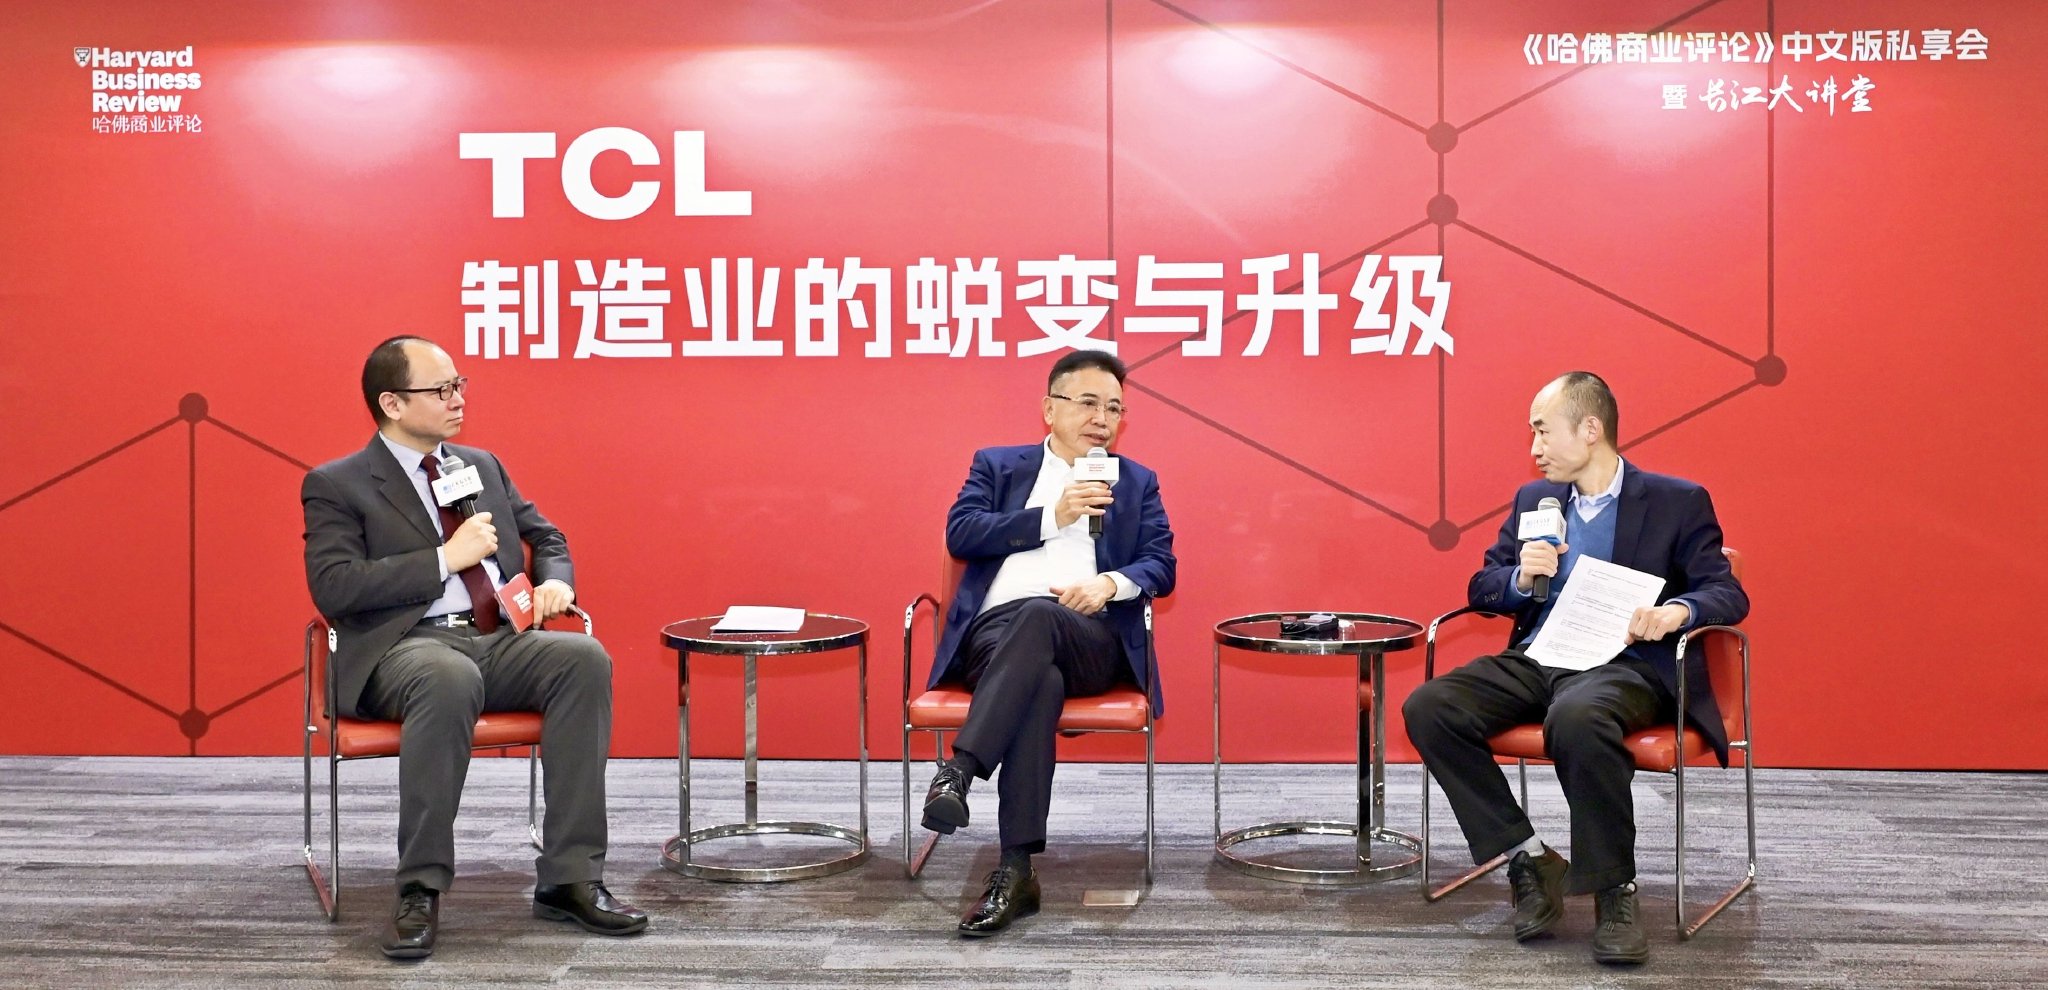 TCL创始人、董事长李东生：全球经营必须以当地团队为主，只抓关键岗位